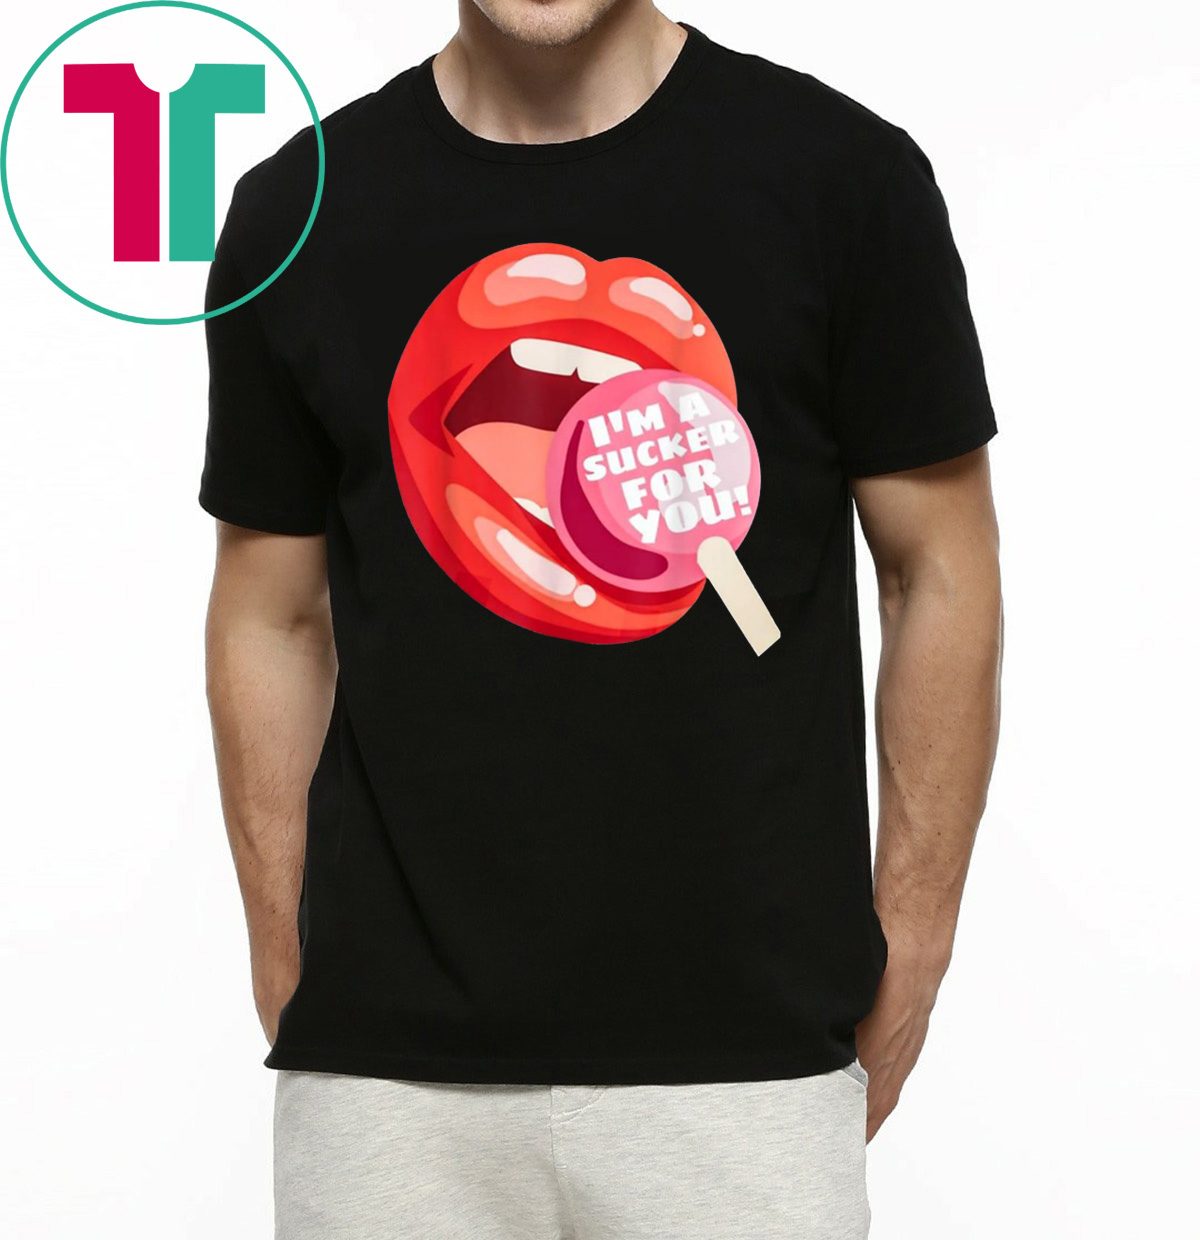 I’m a sucker for you lip t-shirt for mens womens kids - OrderQuilt.com